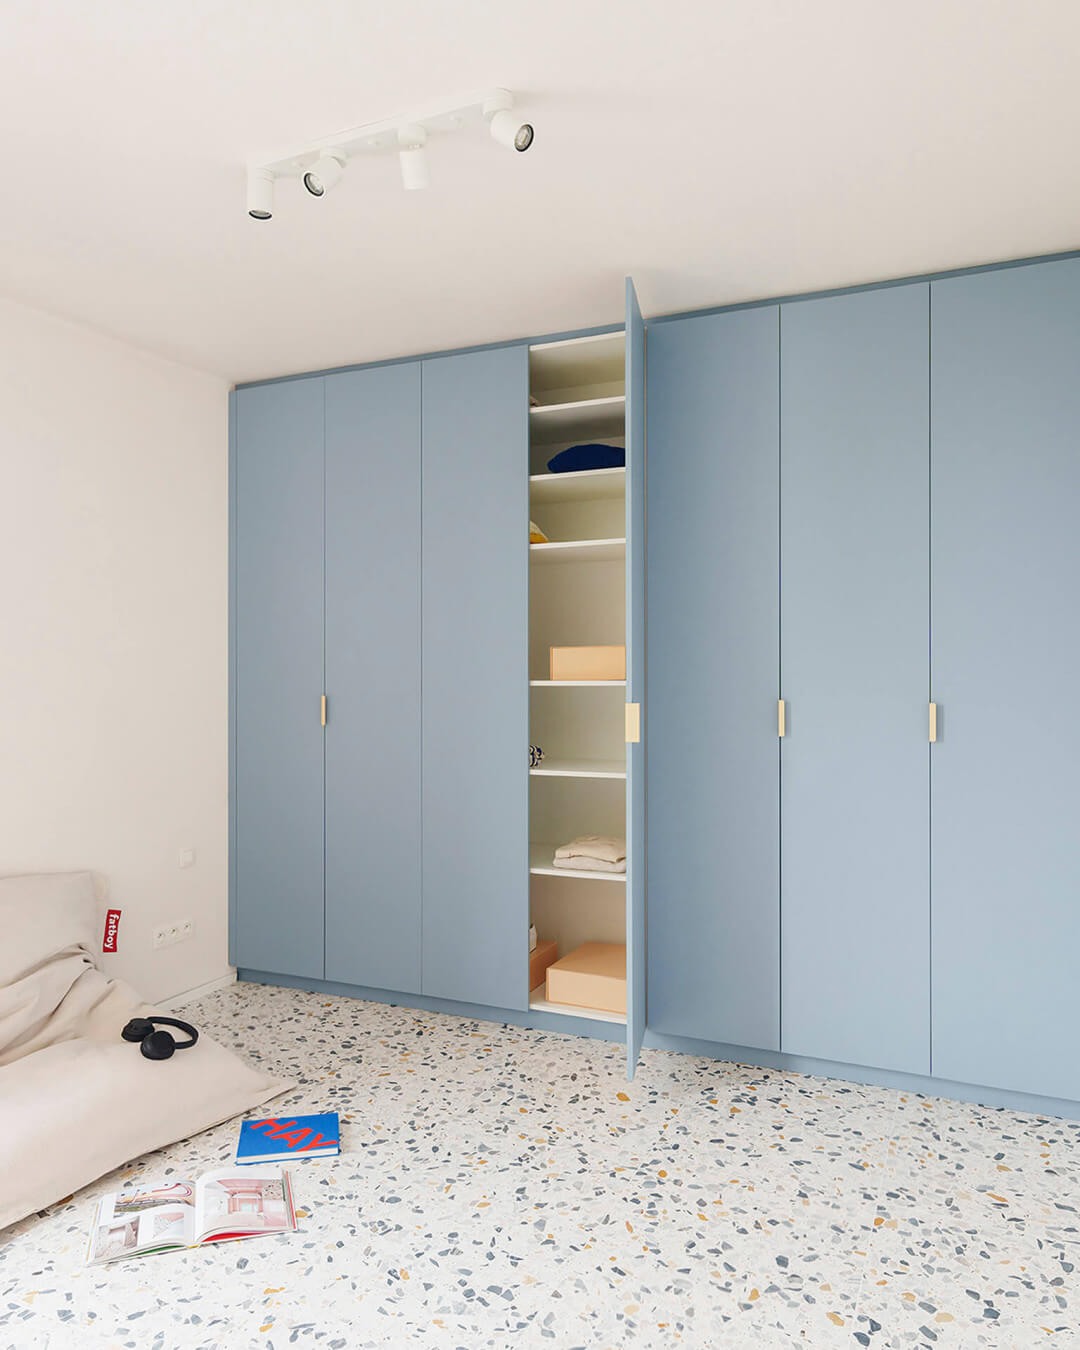 Bespoke wardrobe in the colour Silver Blue